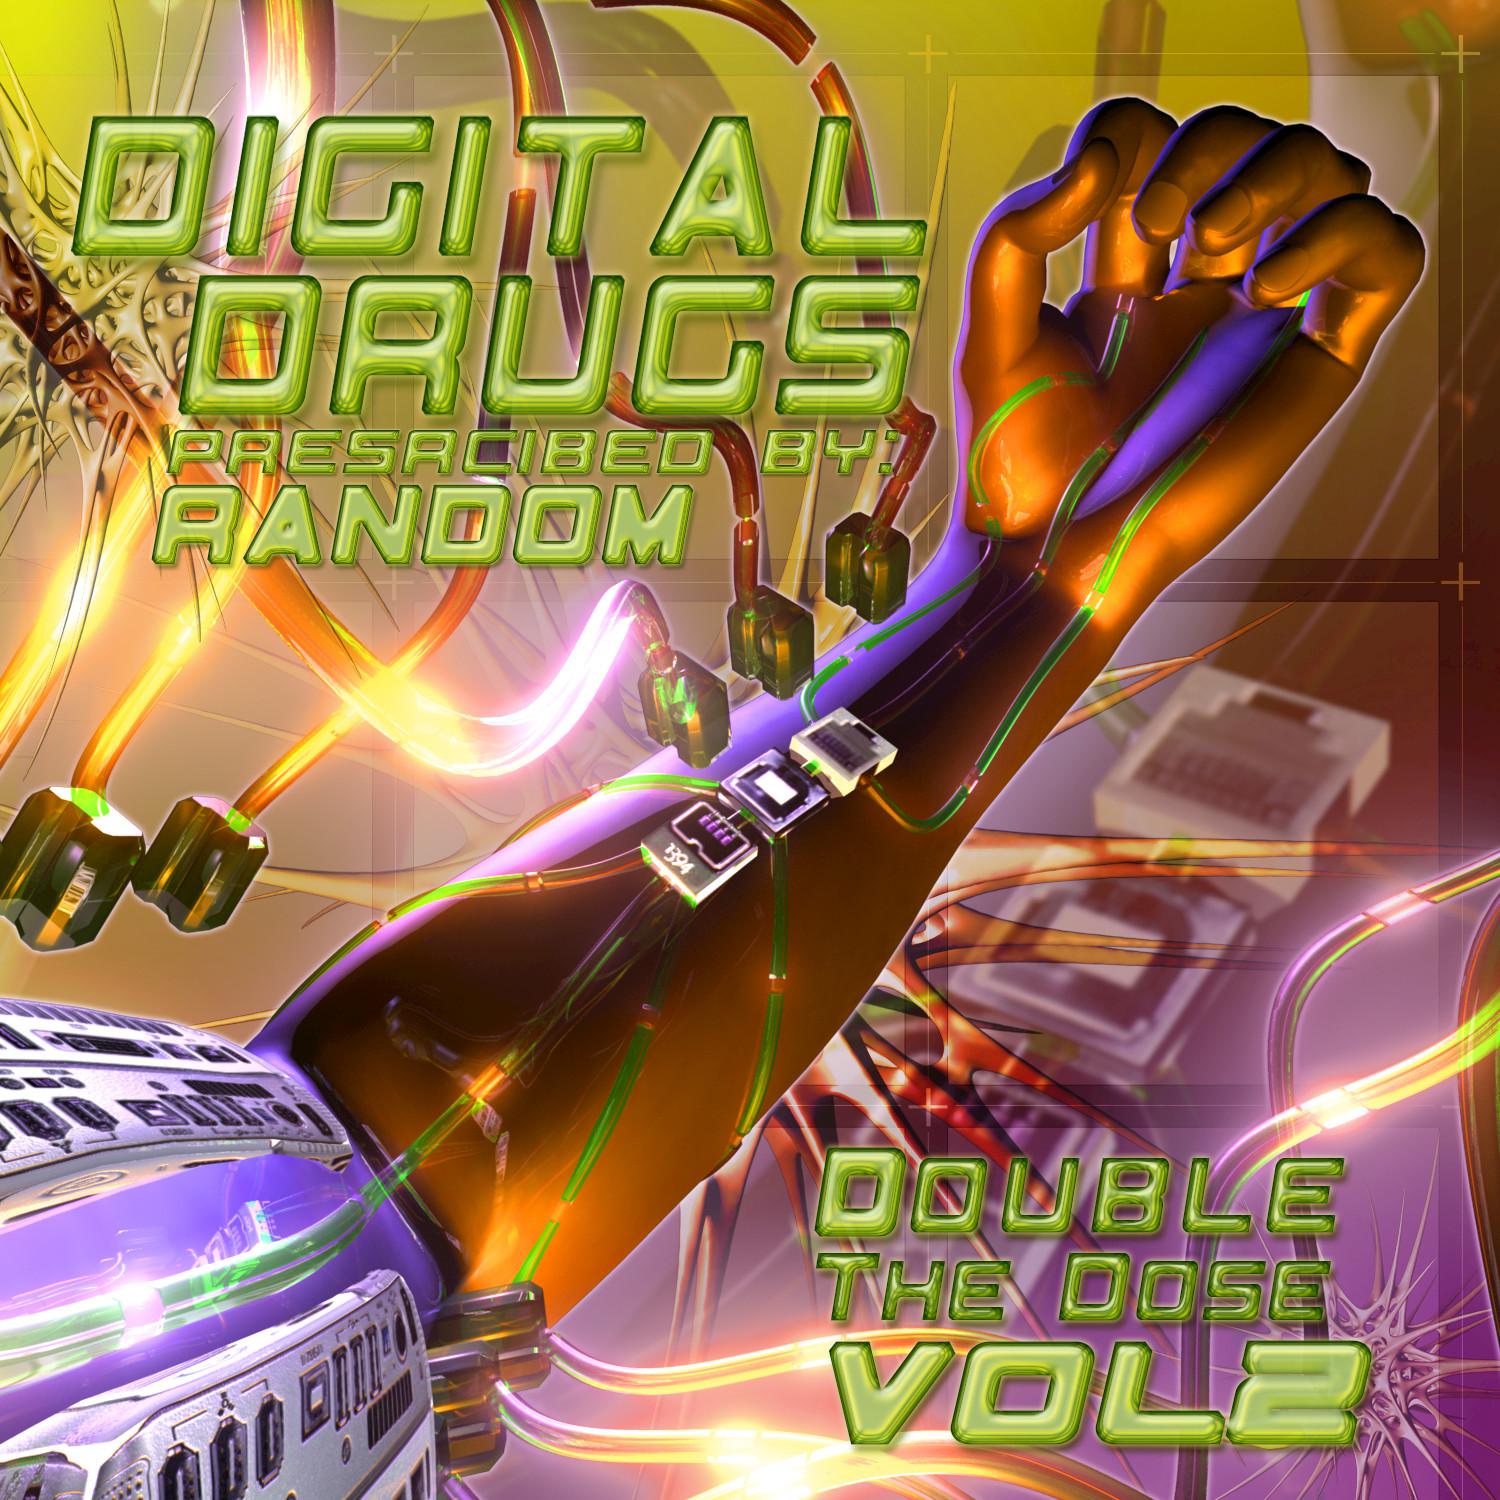 Double the Dose V2 Prescribed by Random - Best of Hi-tech, Darkpsy, Night Fullon, Psychedelic Trance and Neuro